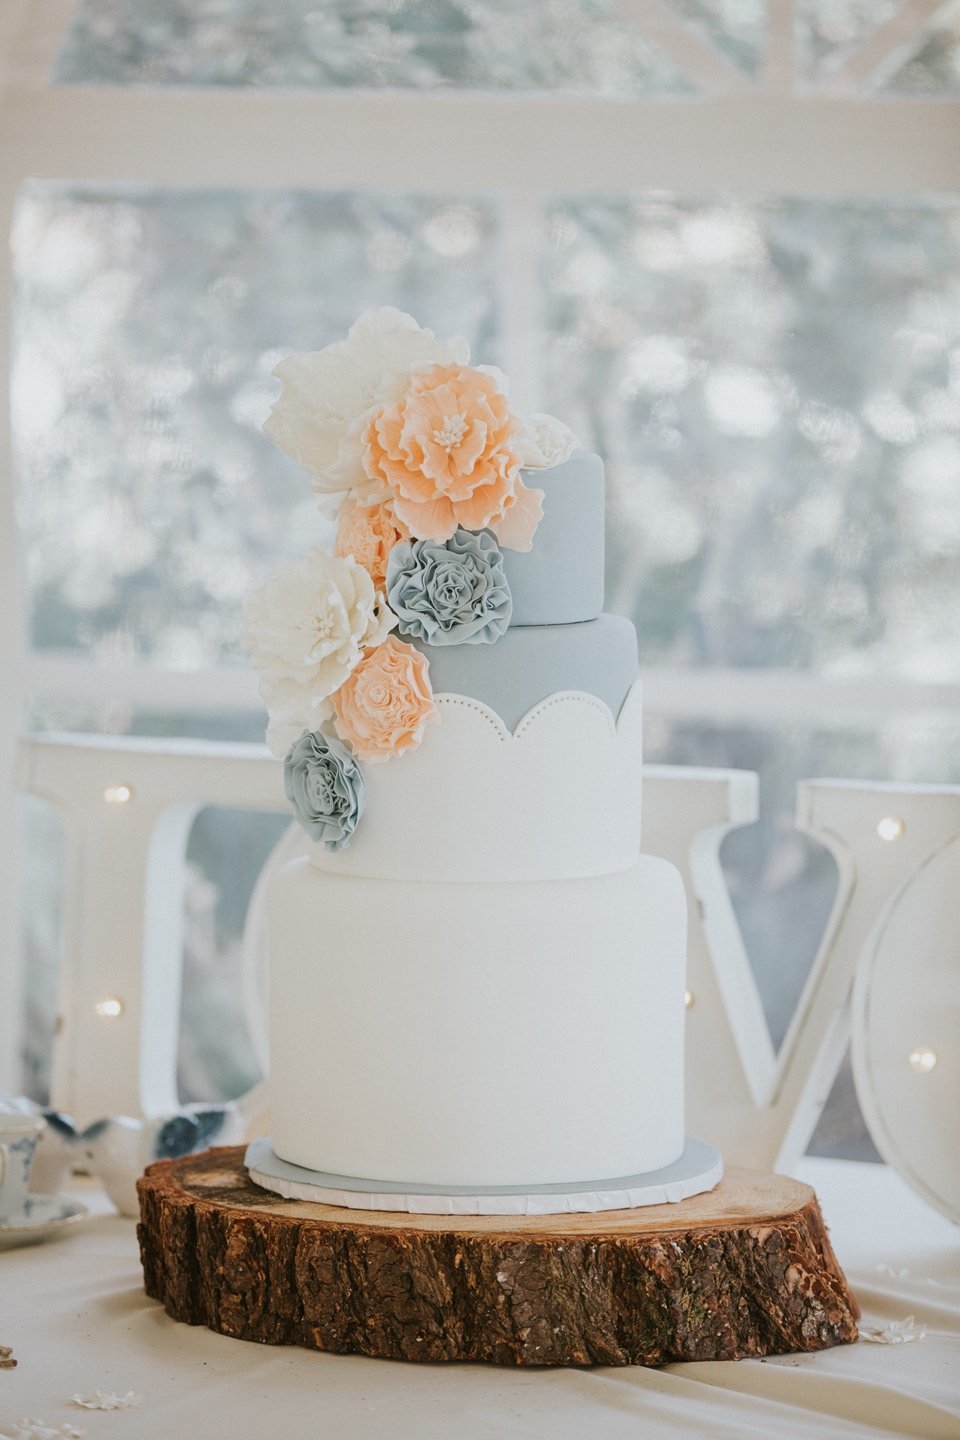 Whippt Wedding Cake - Credit Loree Photography2